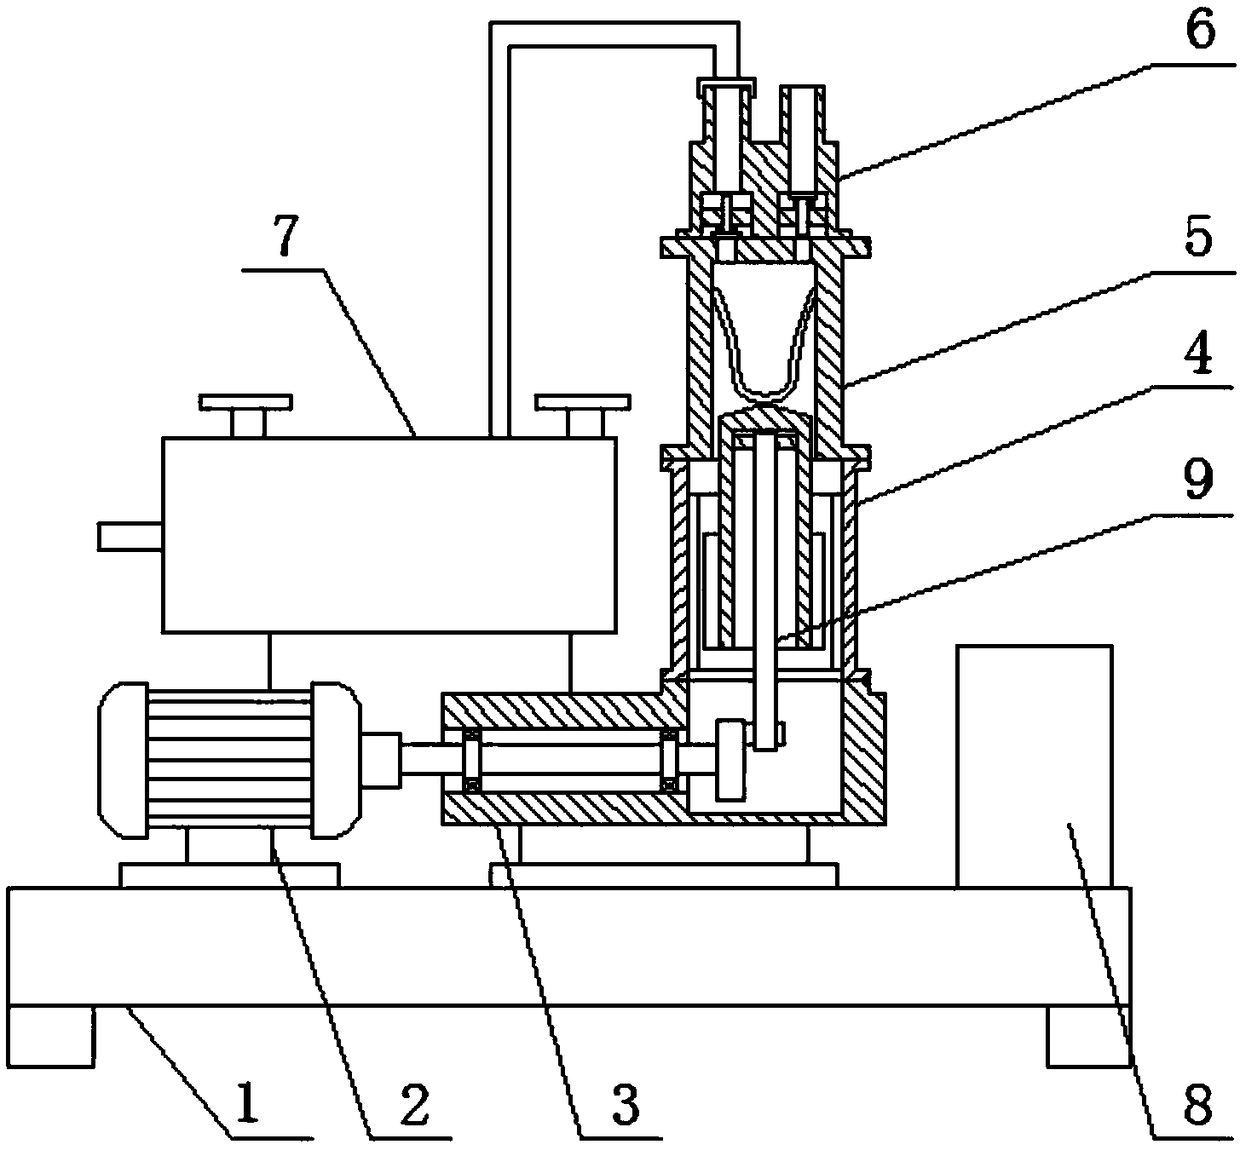 Chlorine gas magnetic levitation centrifugal compressor